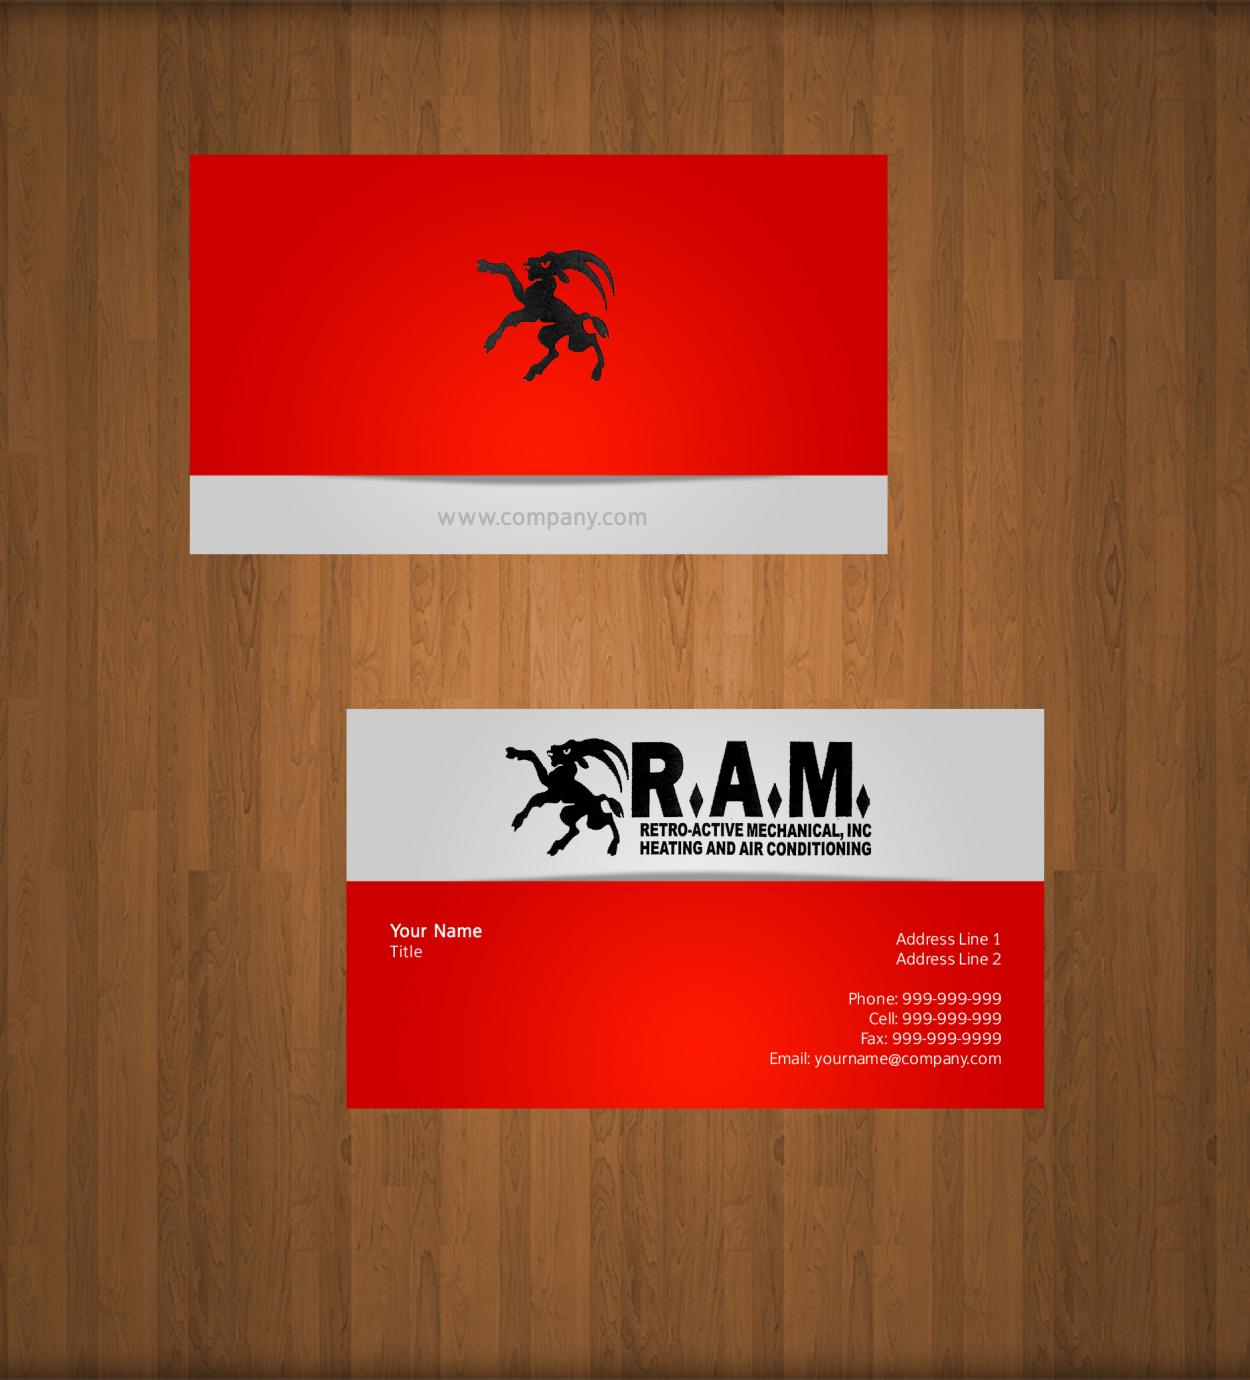 Business Card & Stationery Design entry 366349 submitted by adyyy to the Business Card & Stationery Design for Retro-Active Mechanical, Inc. (RAM) run by ramatlanta